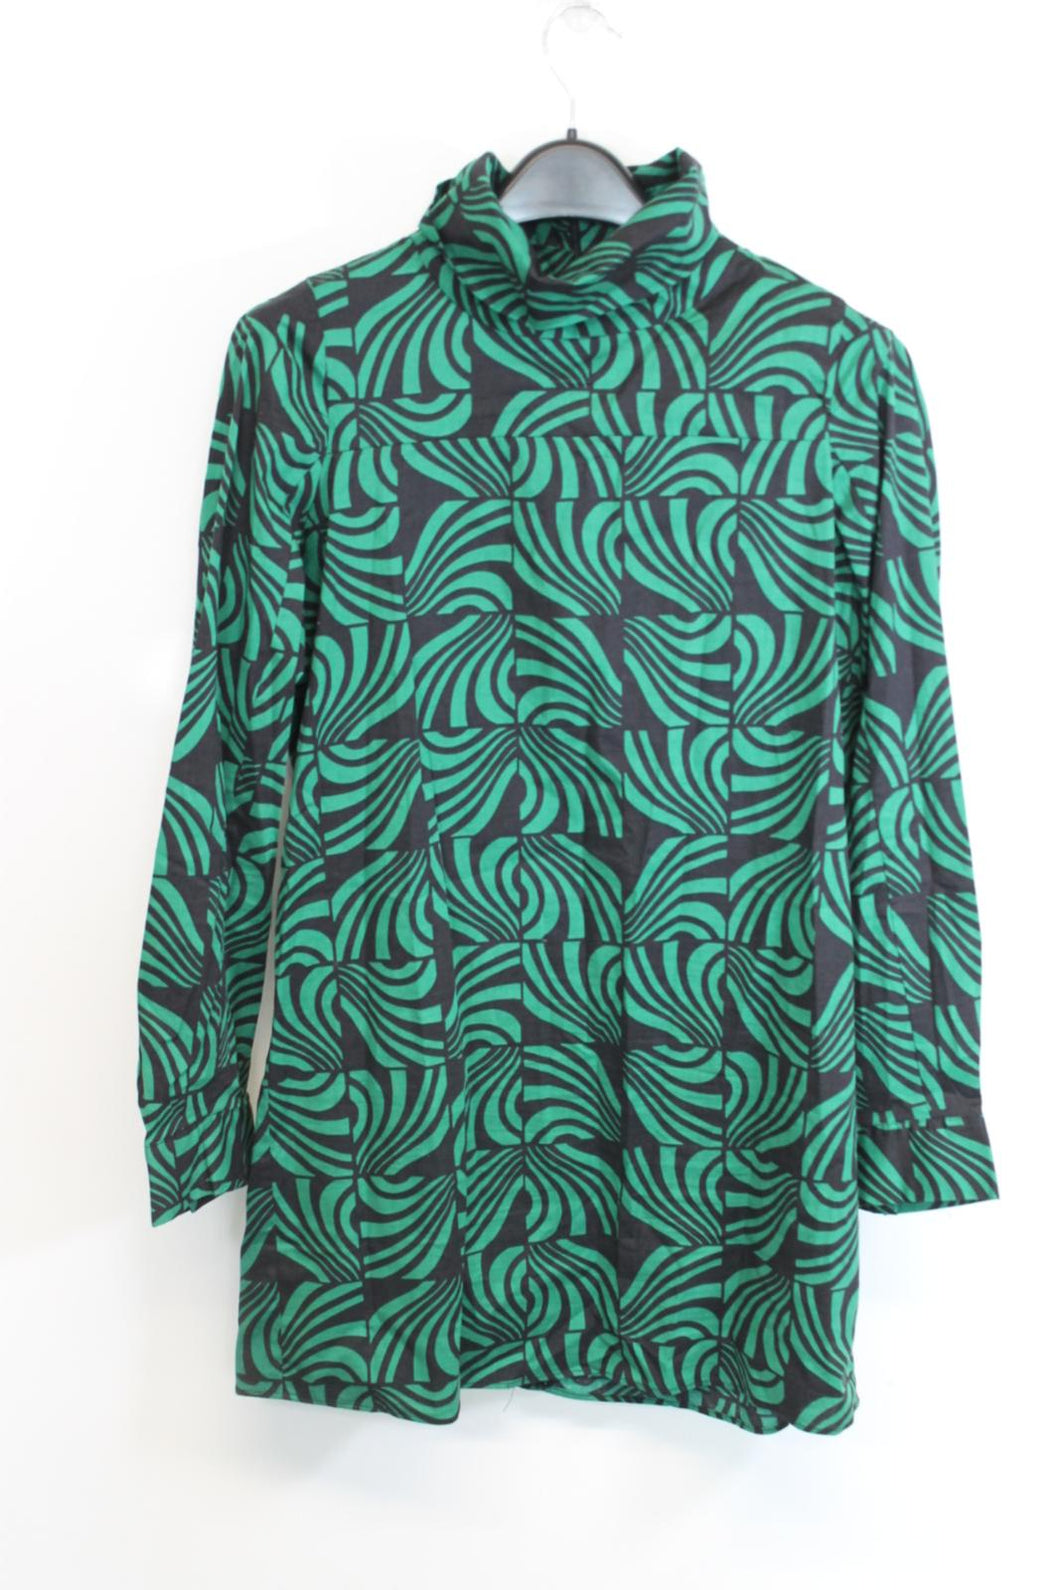 ZARA Ladies Green & Black Cotton Long Sleeve High Neck Mini Dress Size M